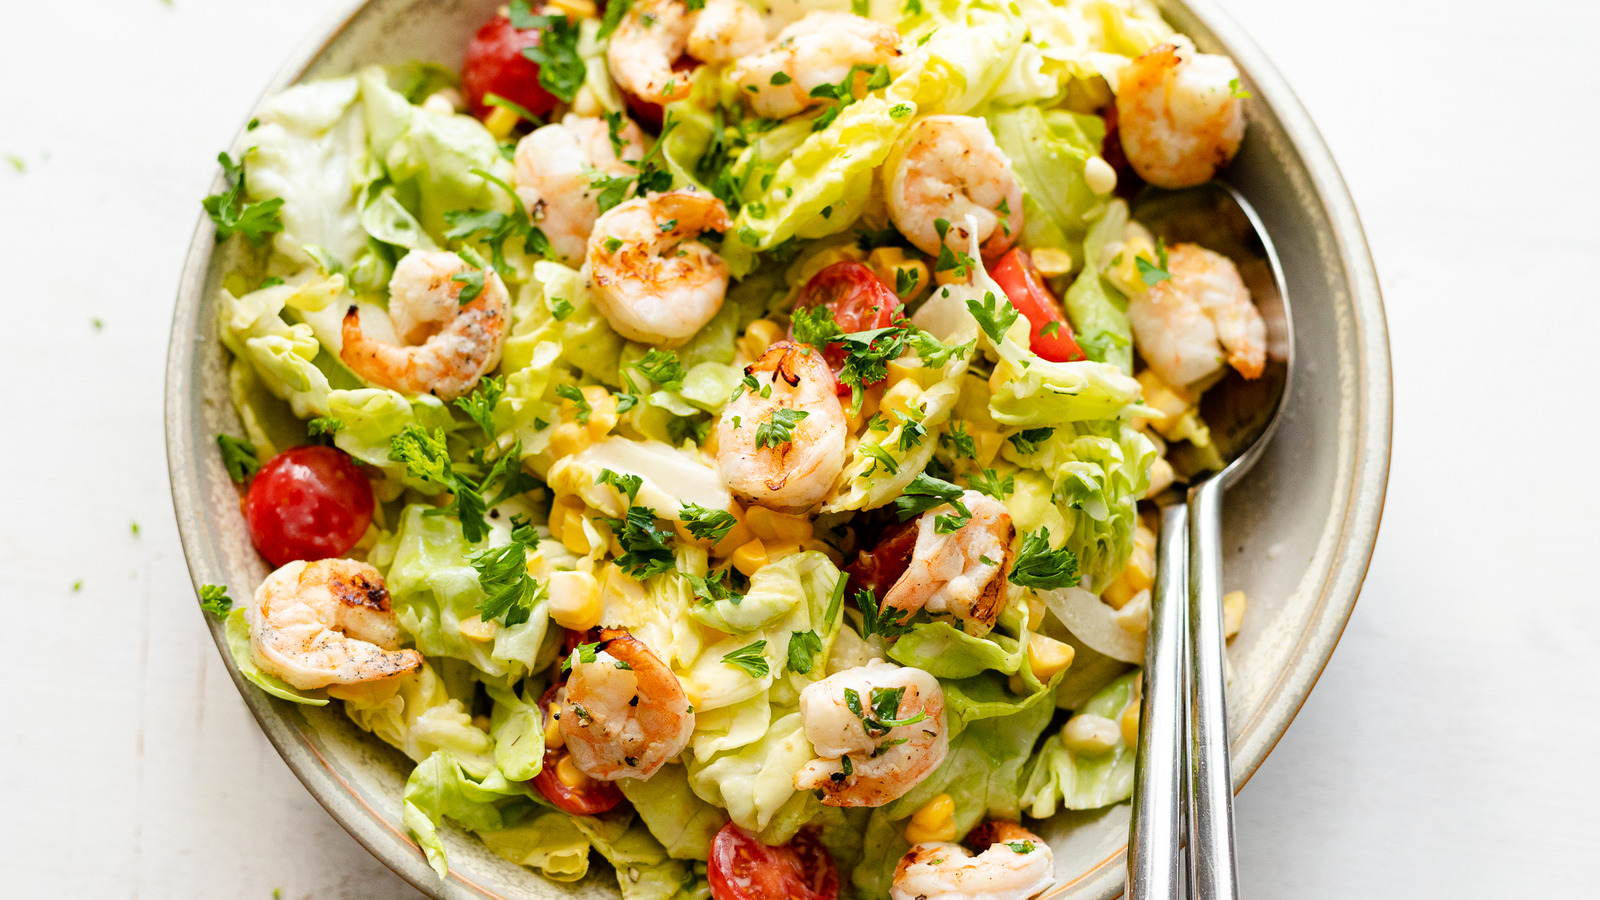 https://www.tastingtable.com/img/gallery/grilled-summer-shrimp-salad-recipe/l-intro-1646058221.jpg